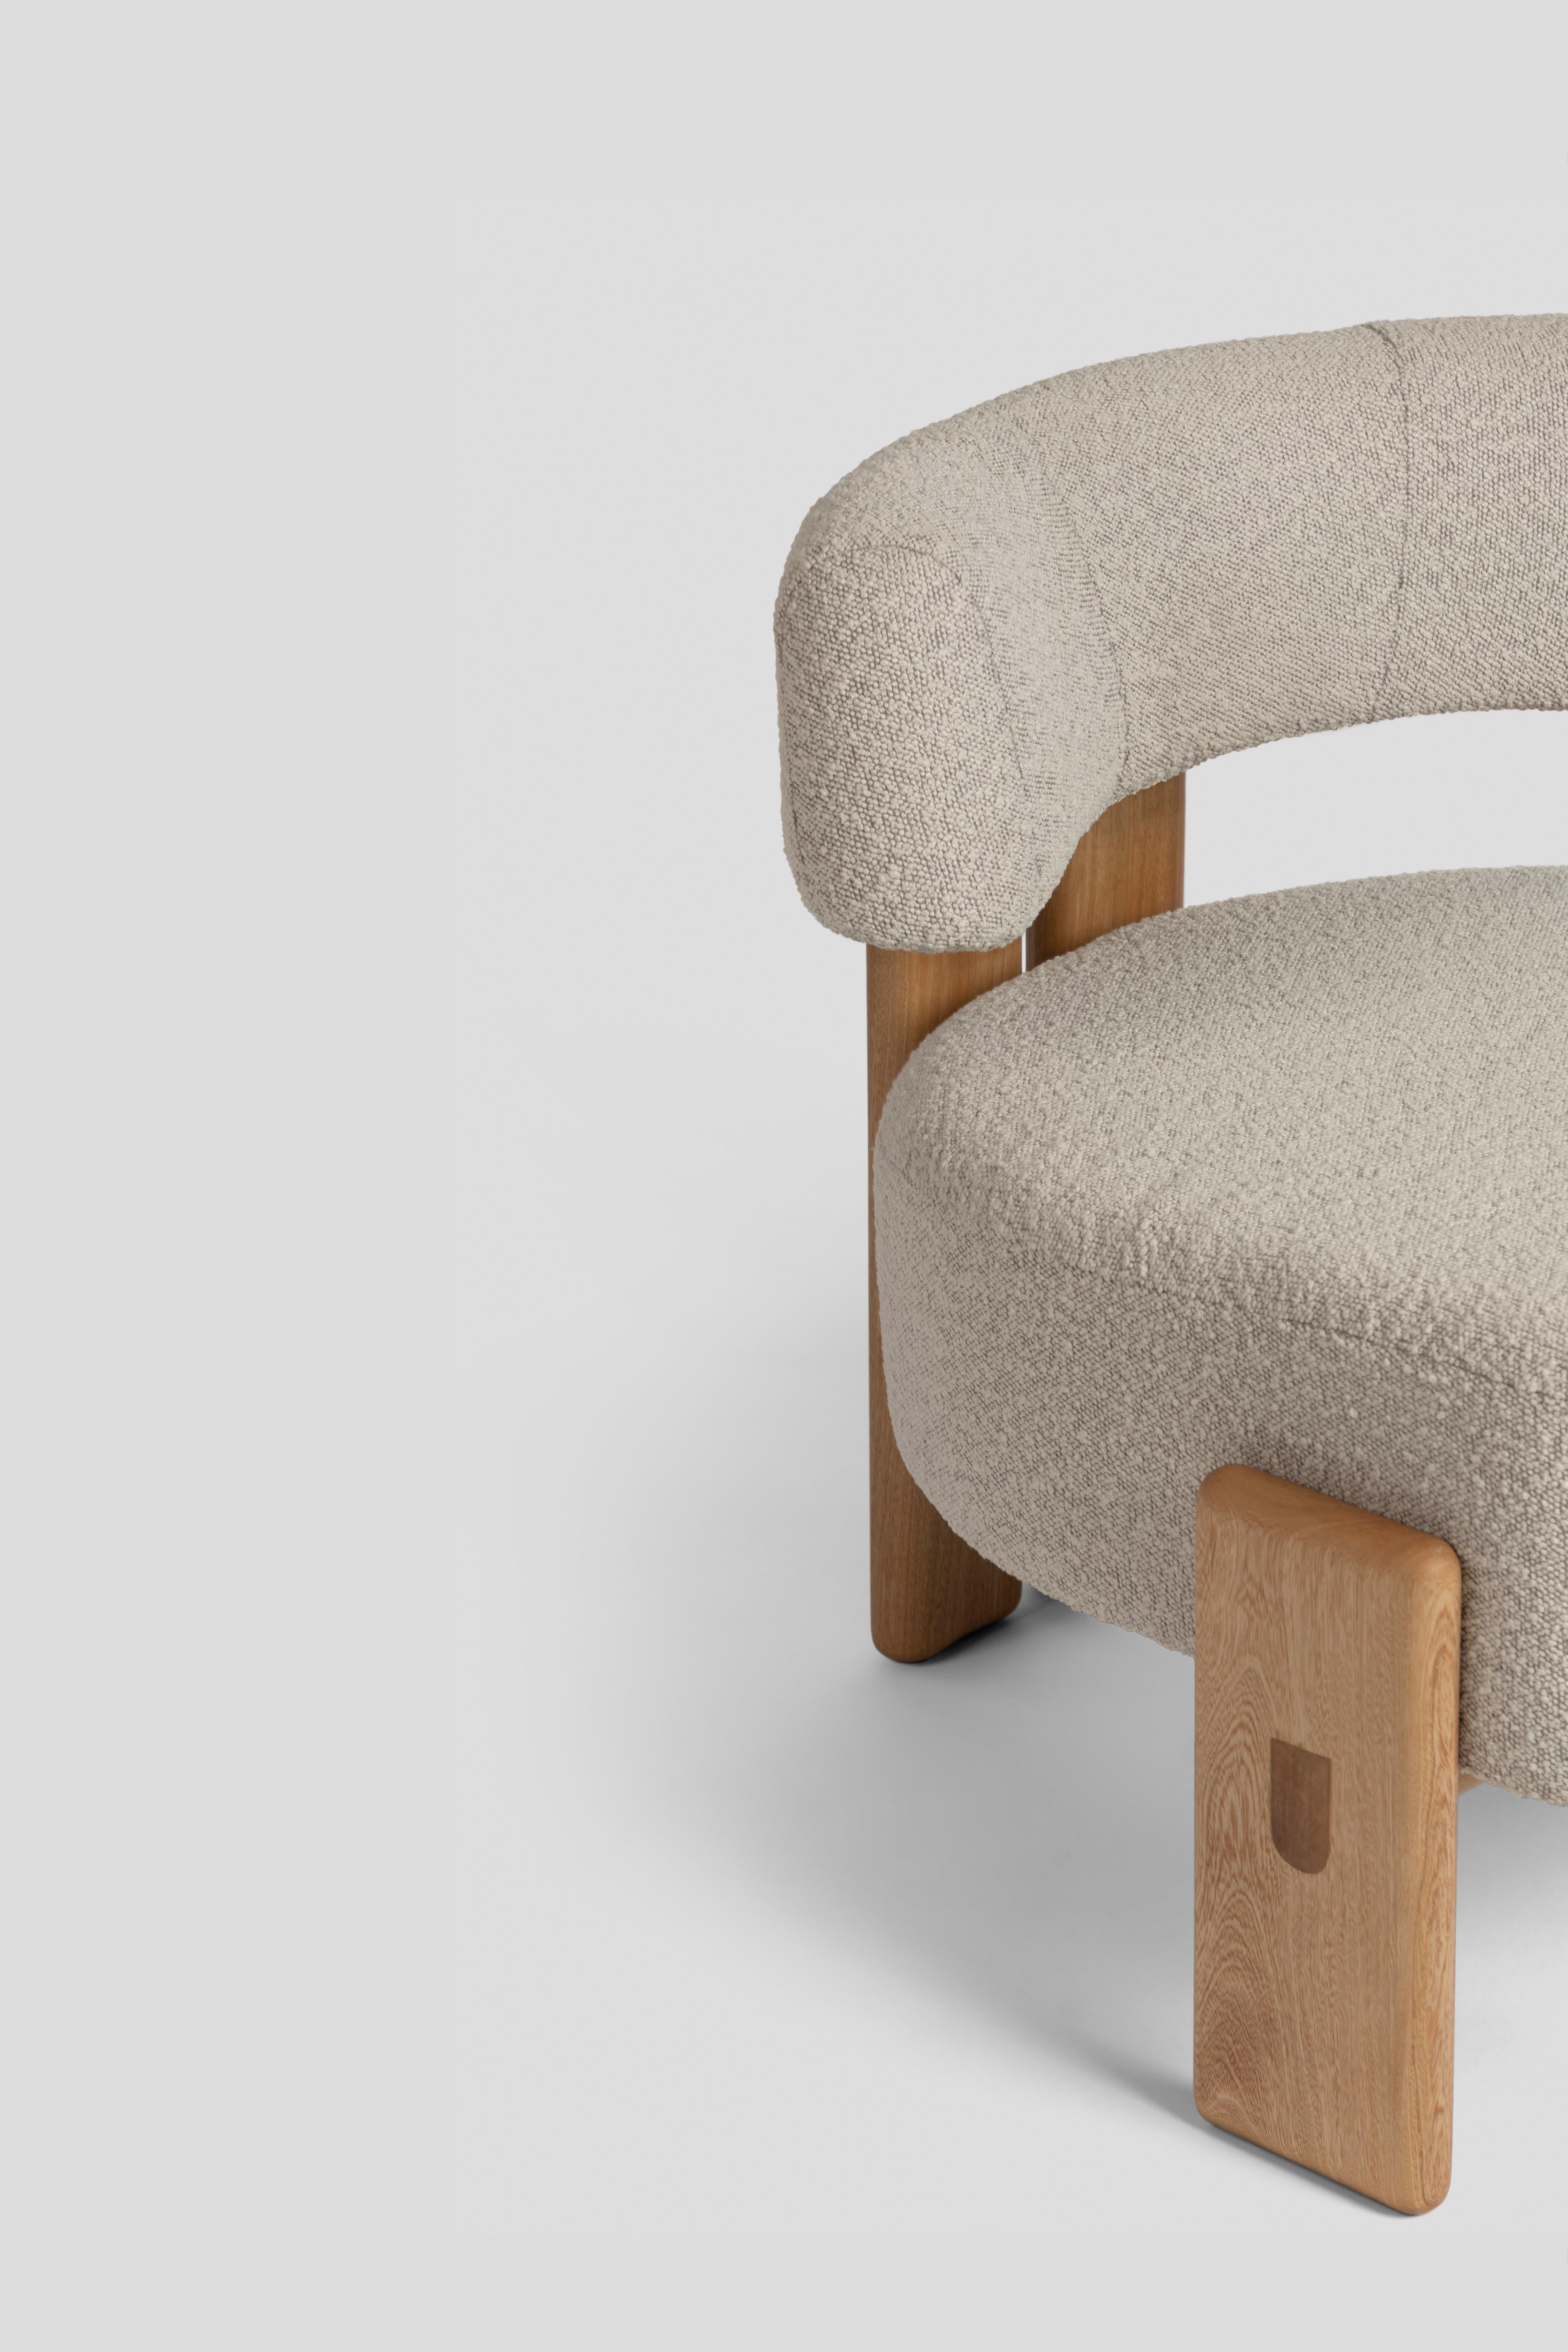 De la Paz Low Chair Solid Wood COM, Contemporary Mexican Design 1